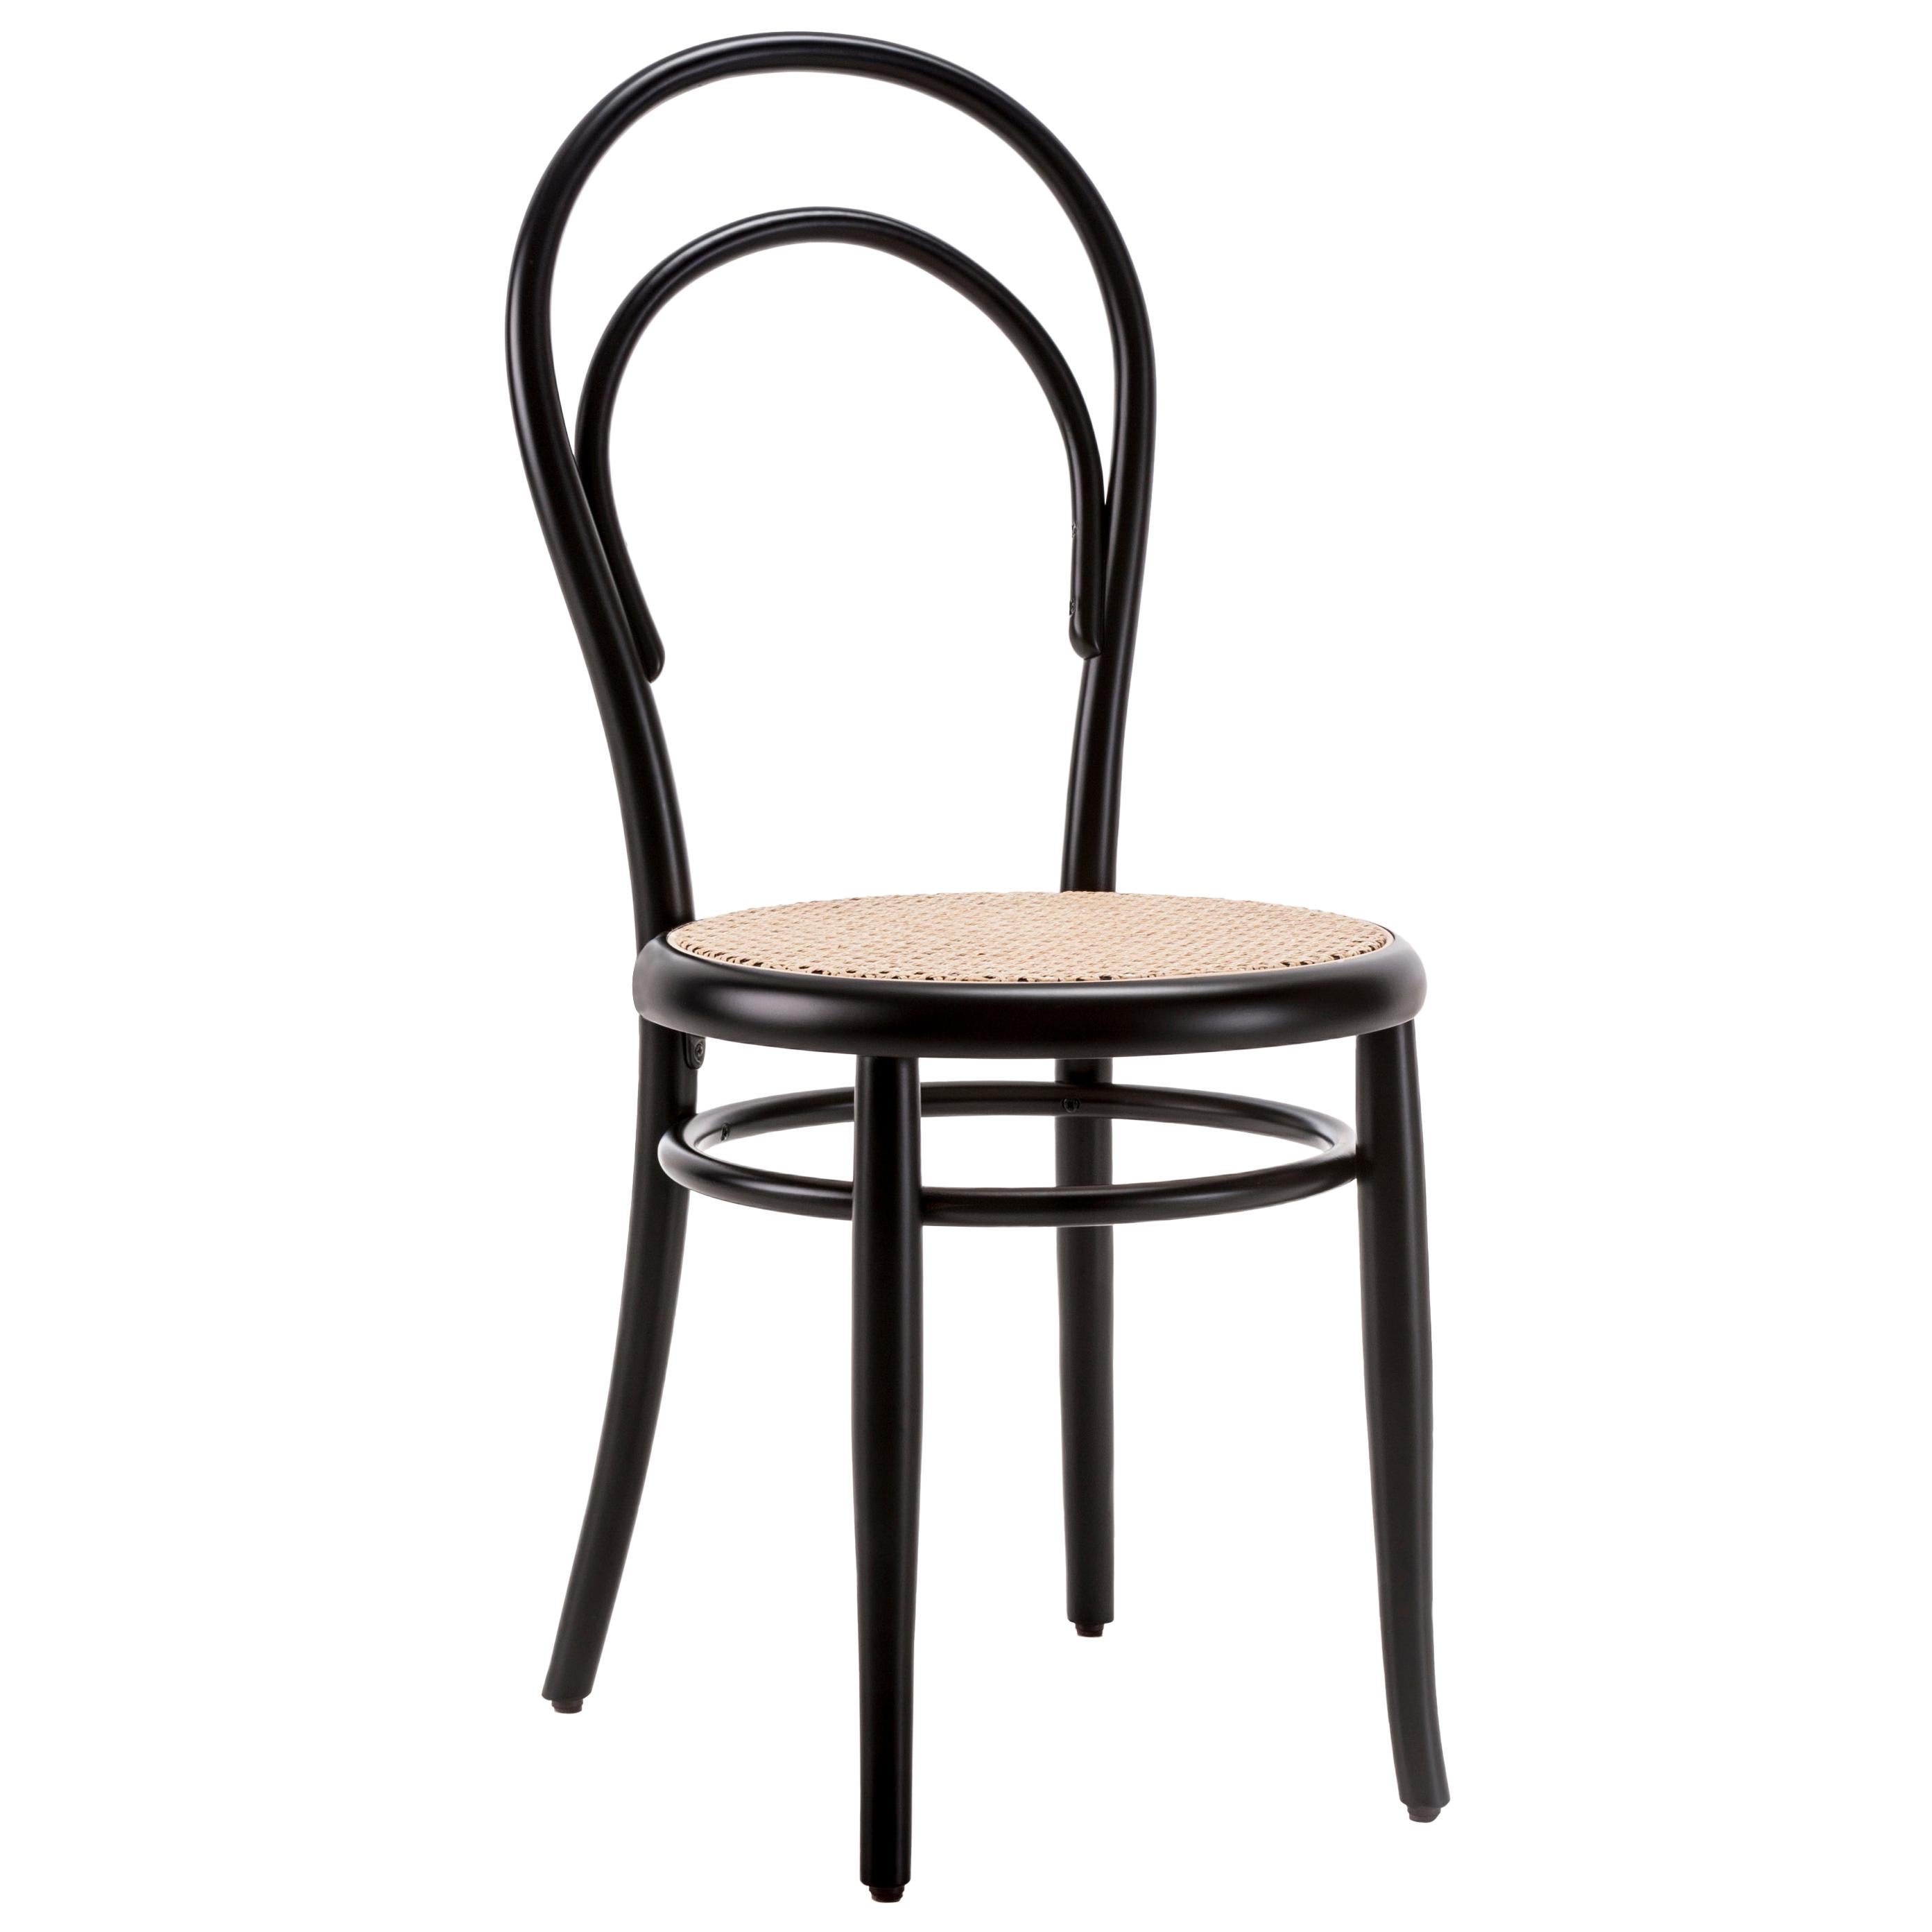 Gebrüder Thonet Vienna GmbH N.14 Chair in Black with Woven Cane Seat